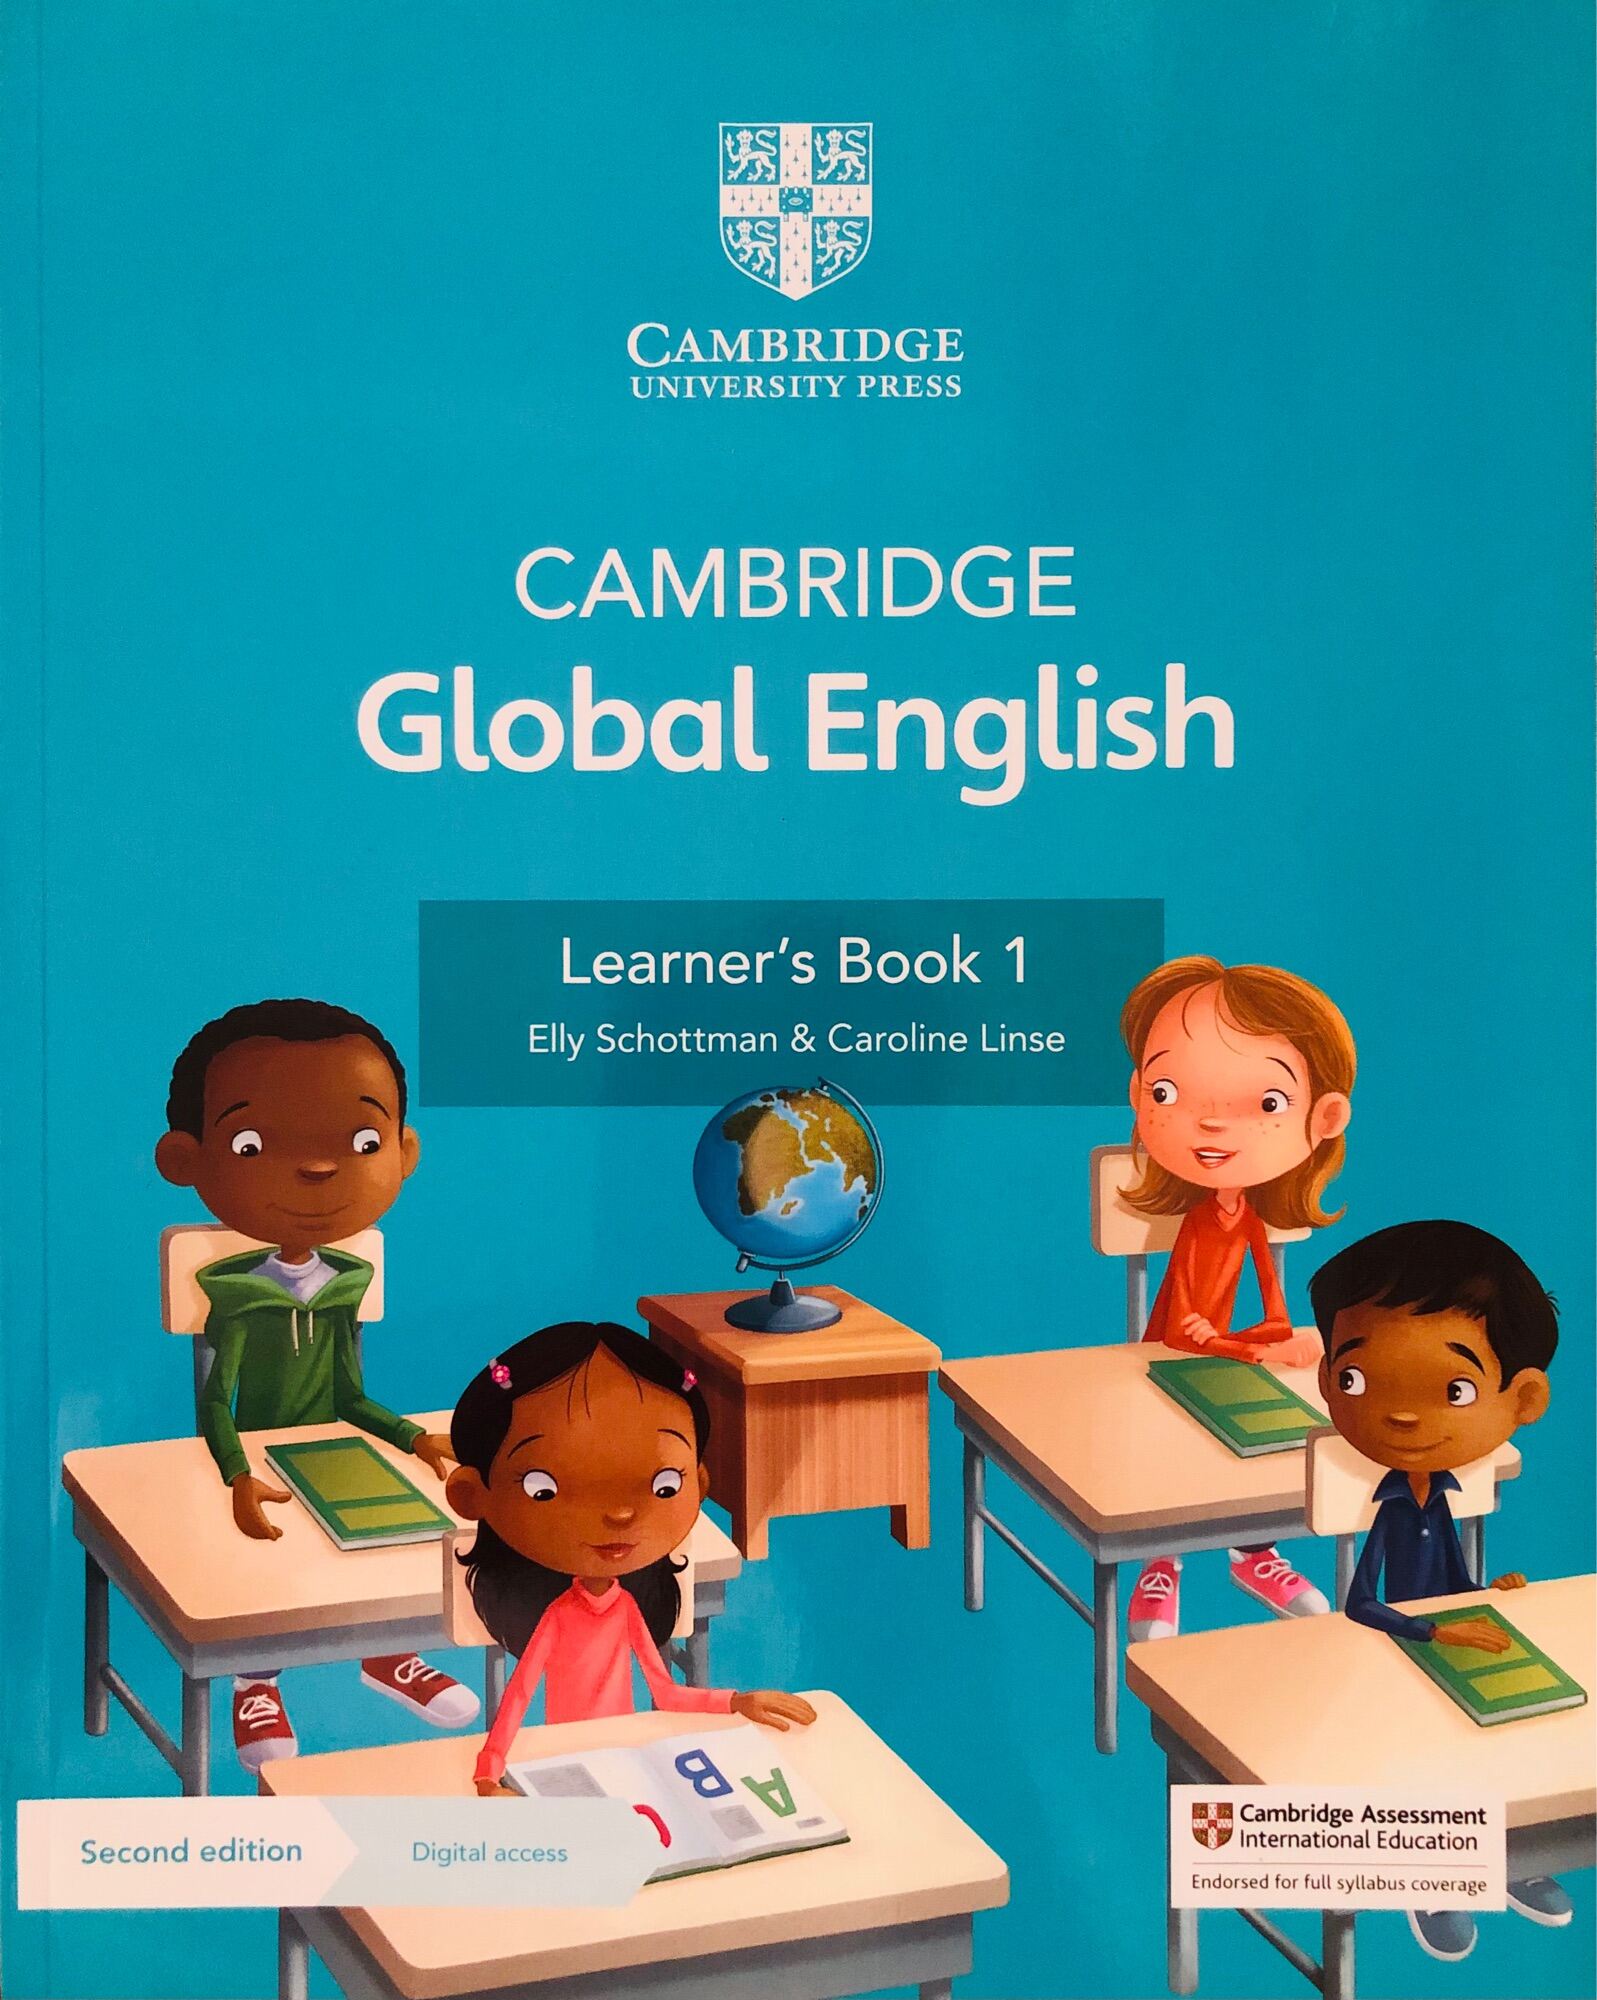 Cambridge Global English second edition